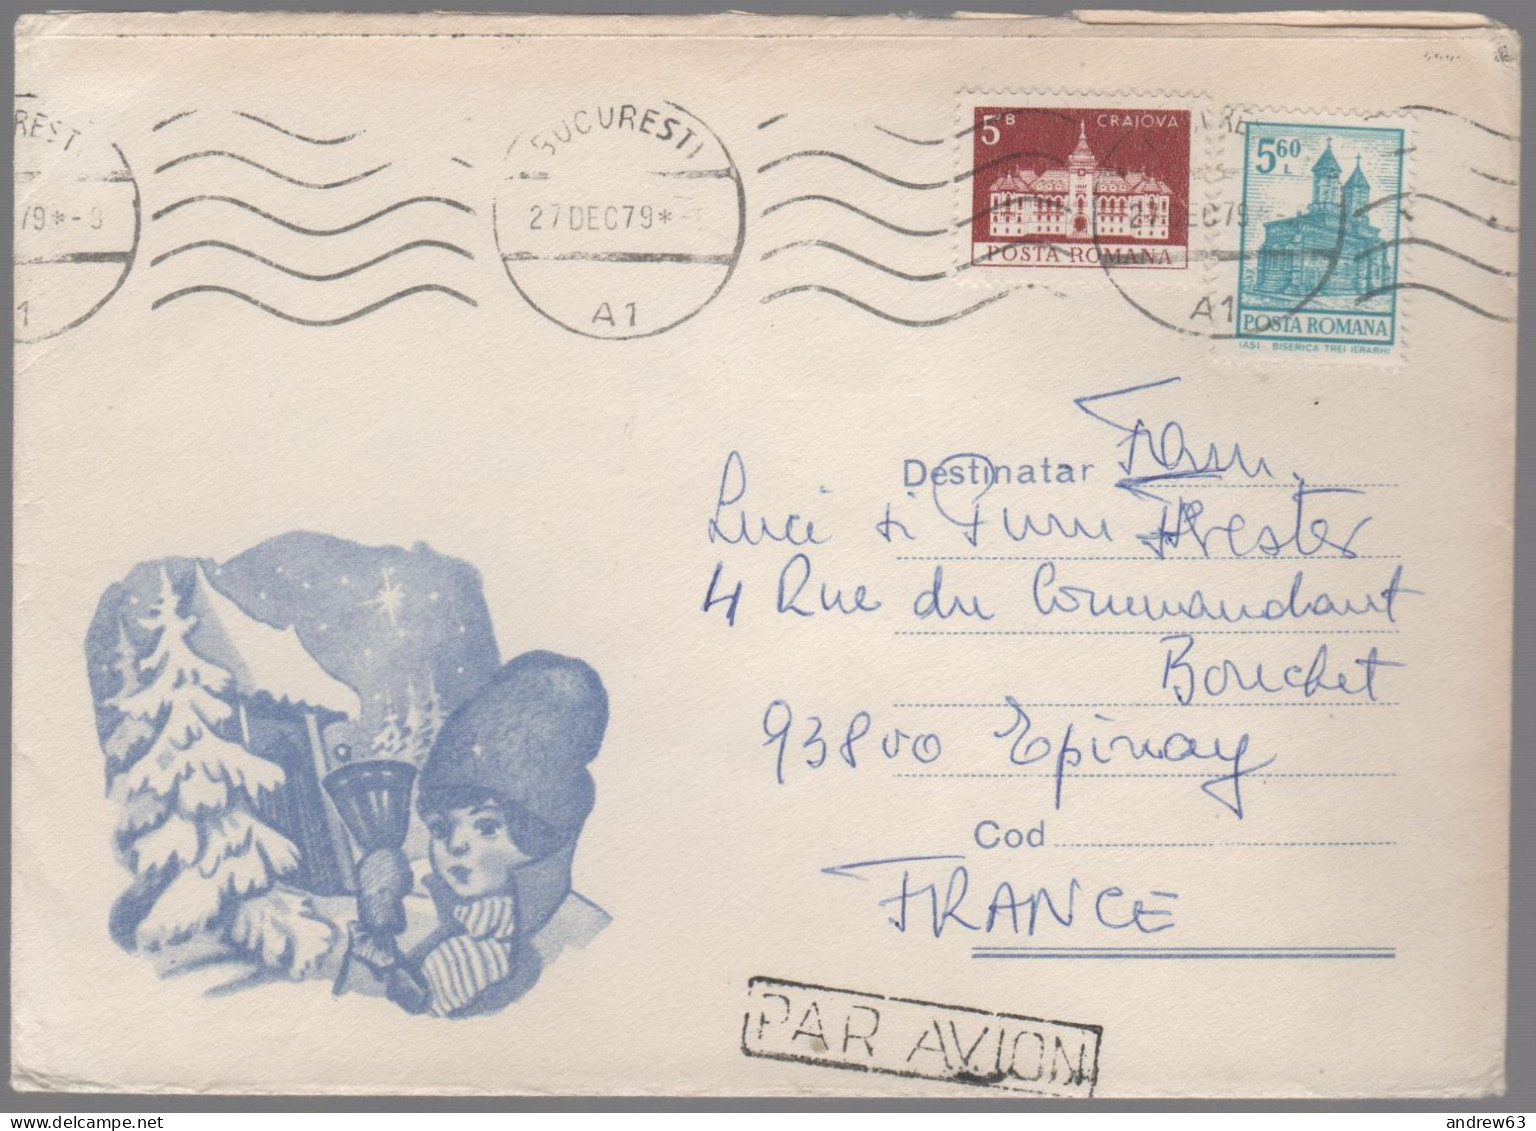 ROMANIA - Rumänien - Posta Romana - 1979 - 5 B + 5,60 L - Viaggiata Da Bucuresti Per Épinay-sur-Seine, France - Briefe U. Dokumente